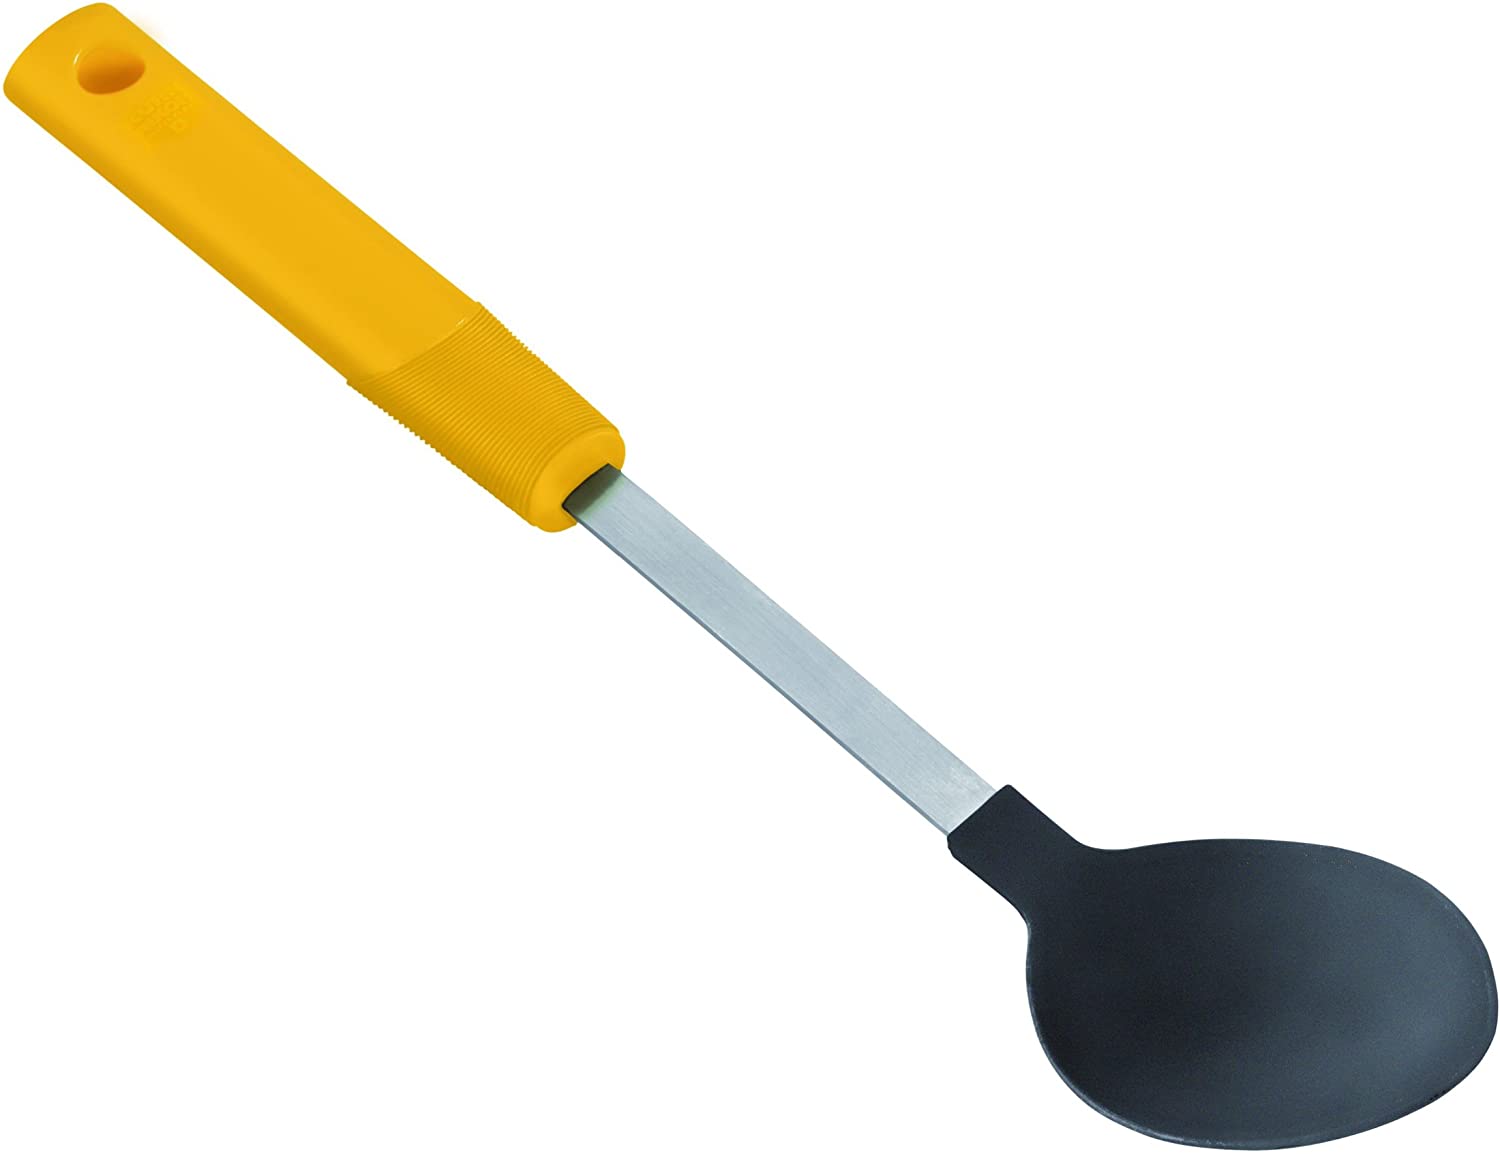 KUHN RIKON Cooks\' Tools 22678 Kitchen Aids & Accessories Sauce Spoon Yellow